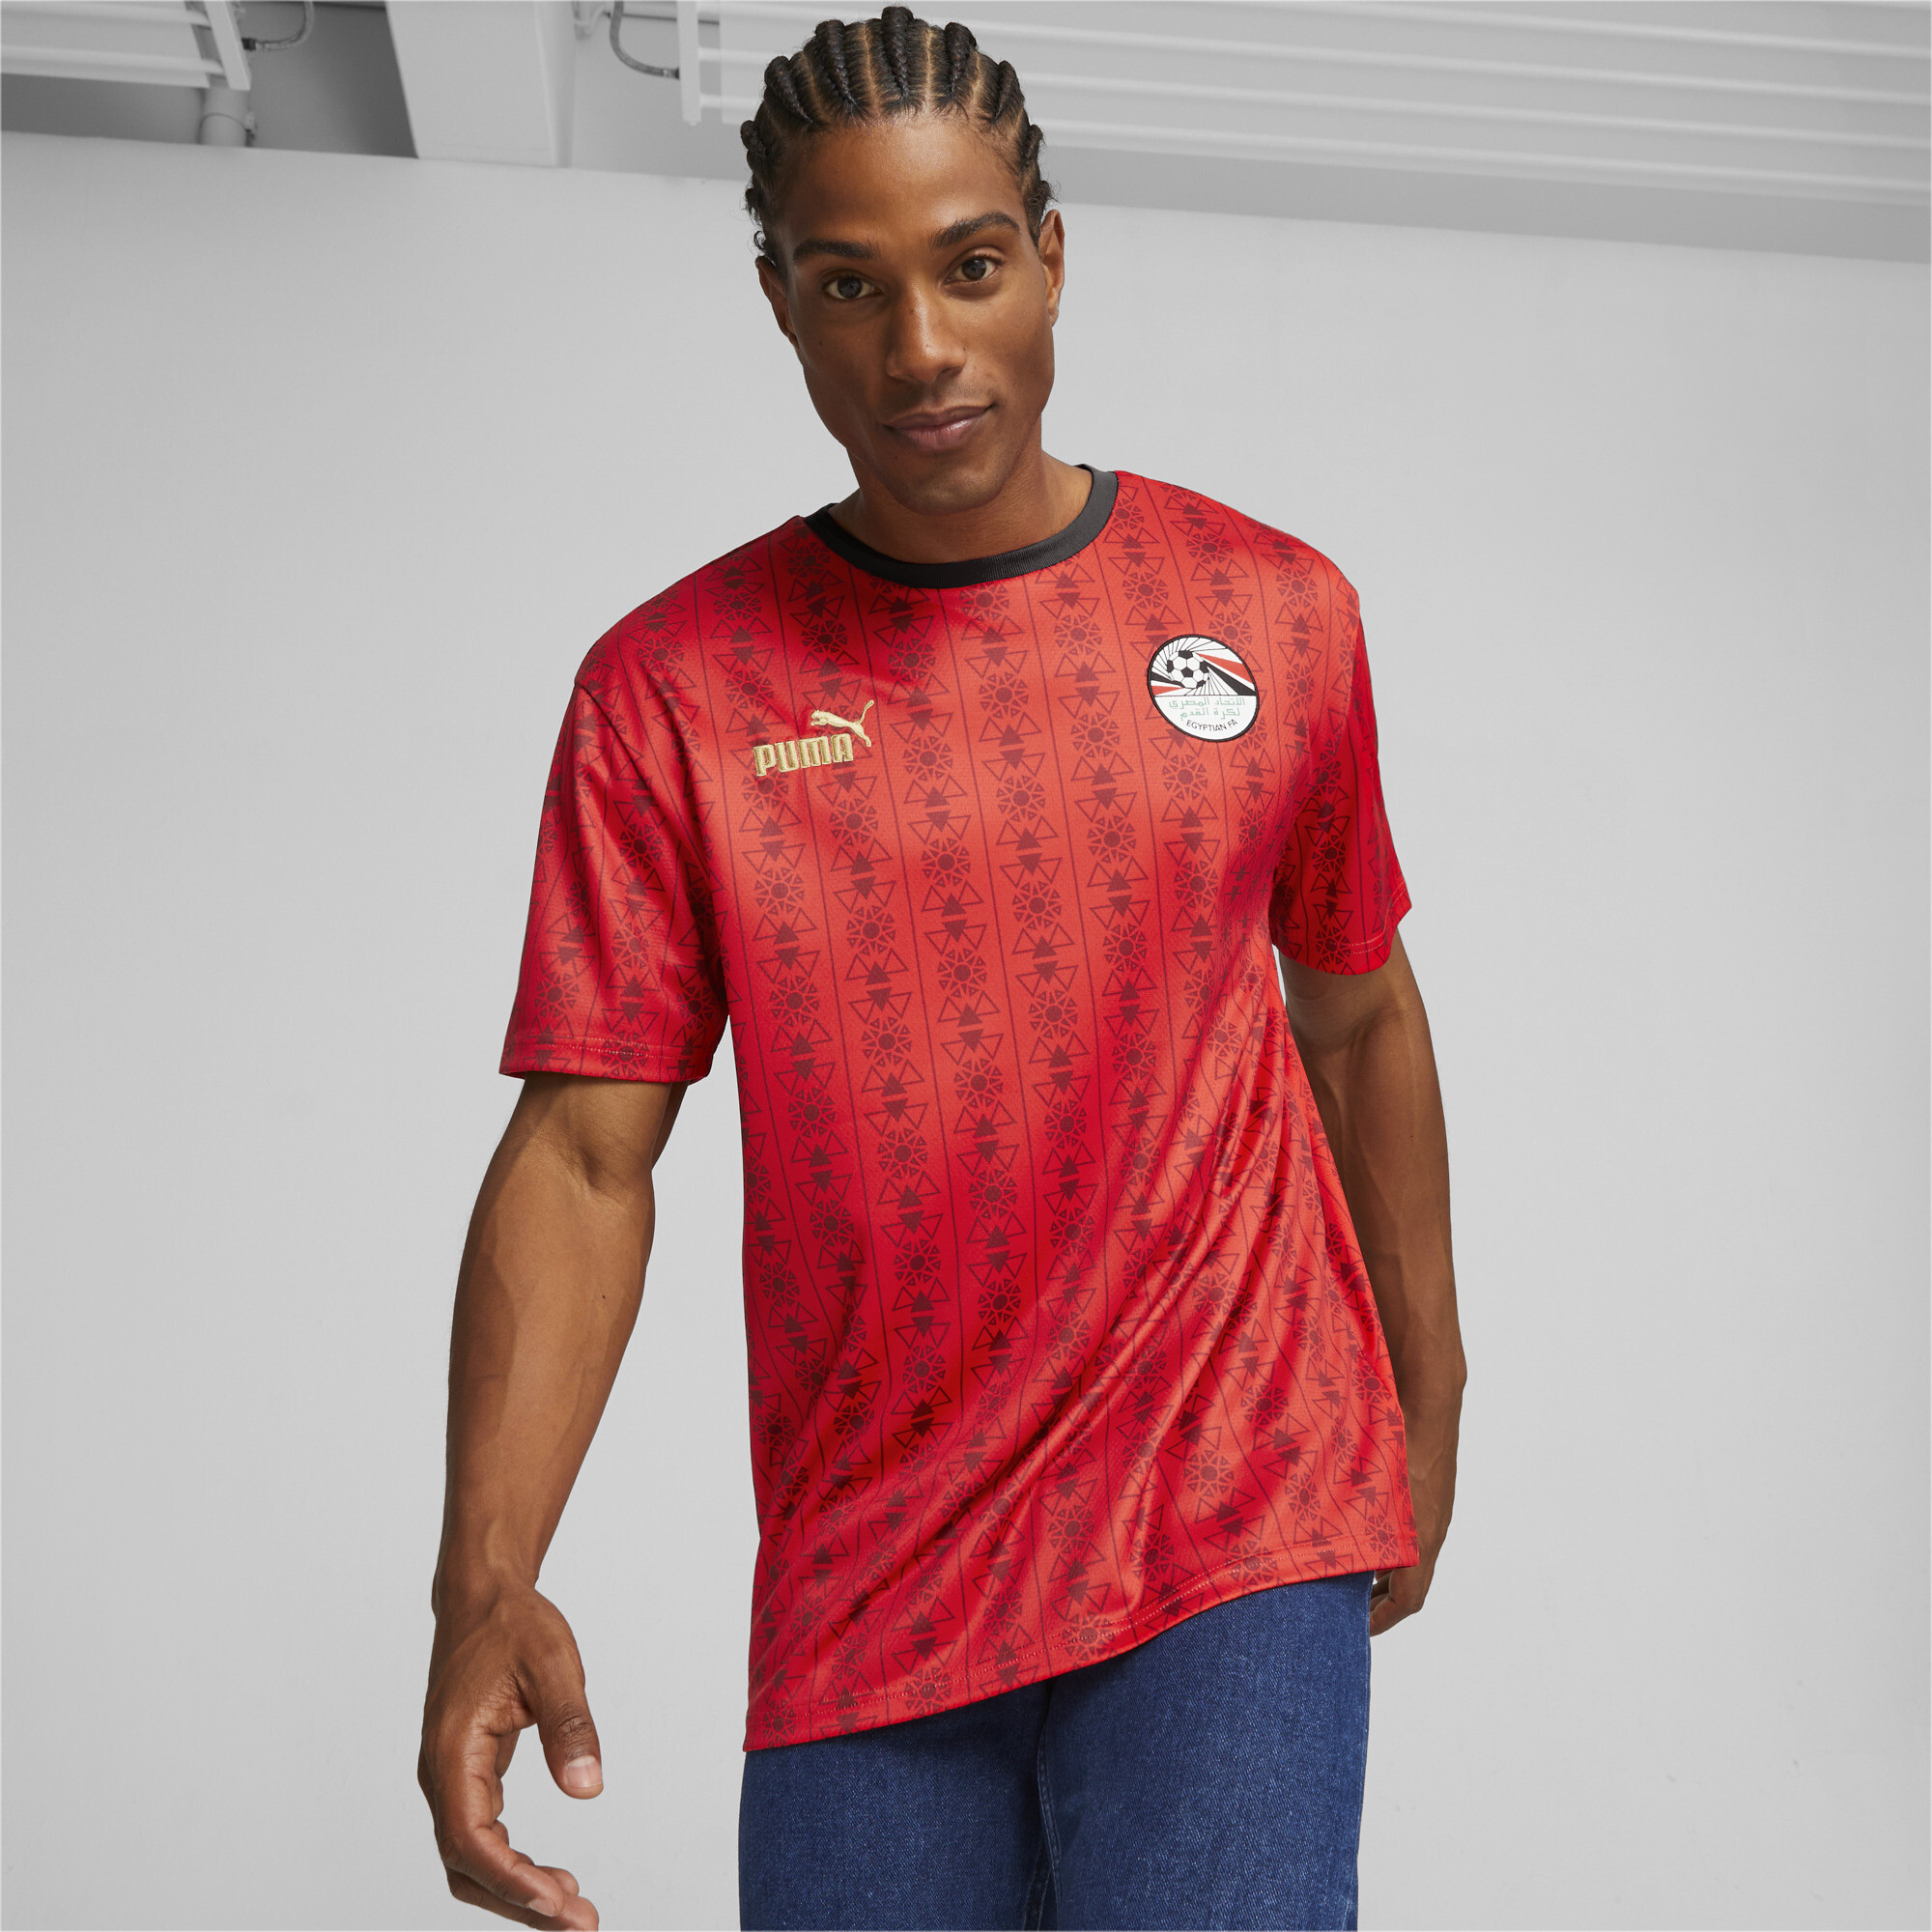 Camisa Nike Brasil Home 2022/23 Torcedor Pro Masculina - Neymar JR nº